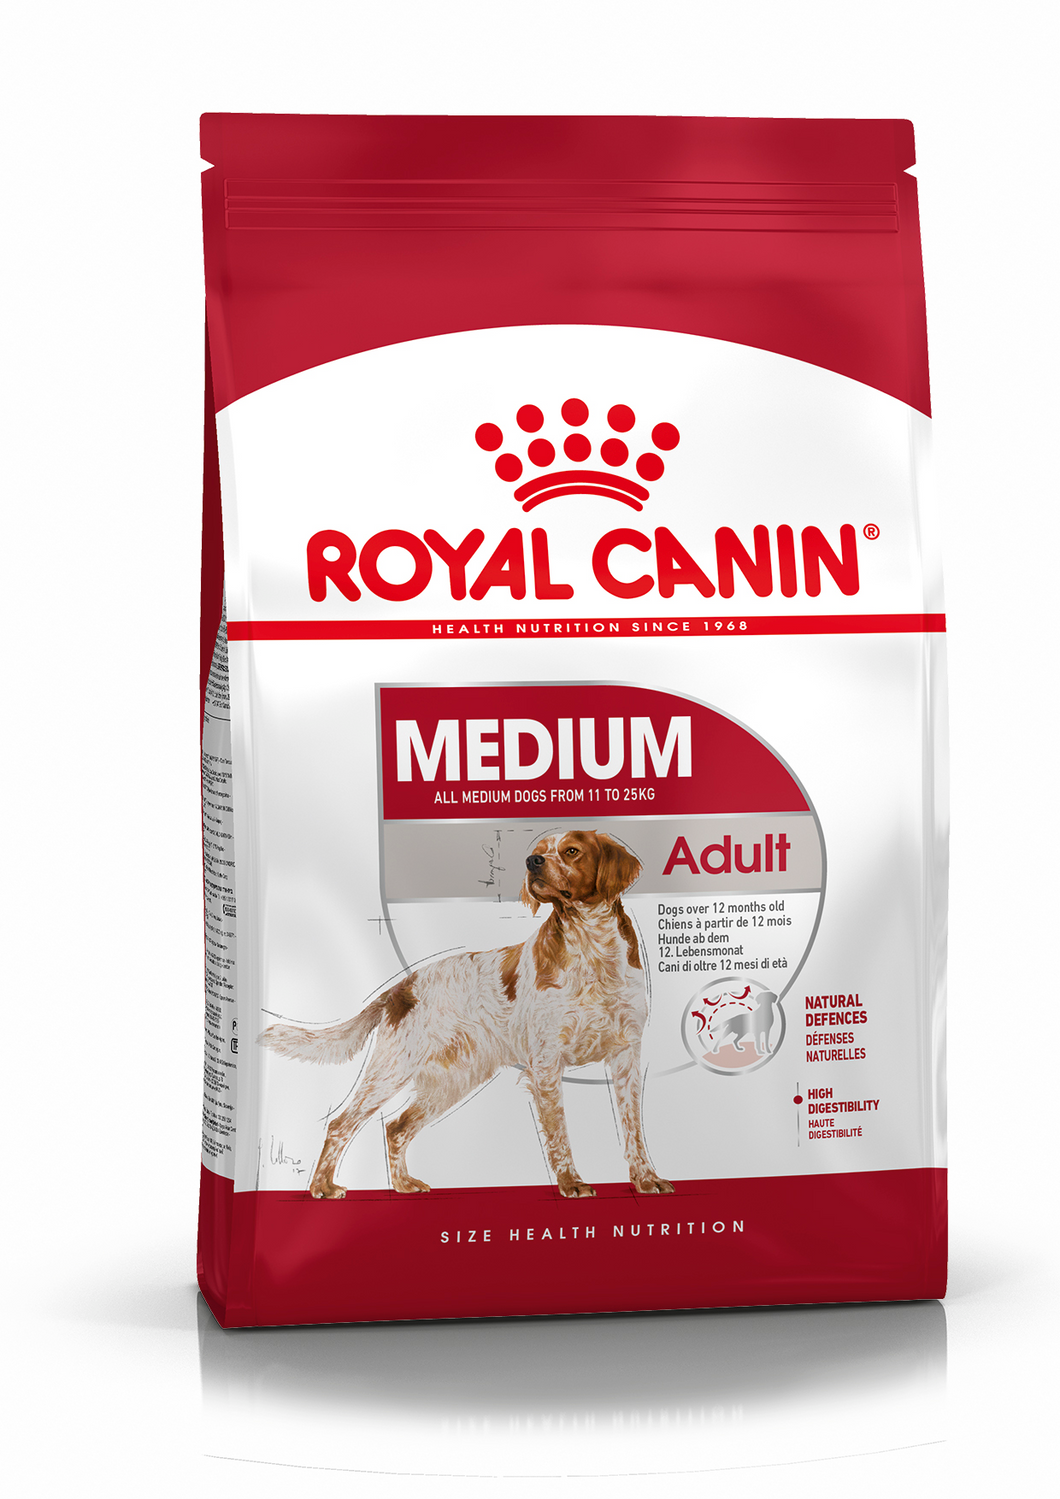 ROYAL CANIN Medium Adult Dog Food